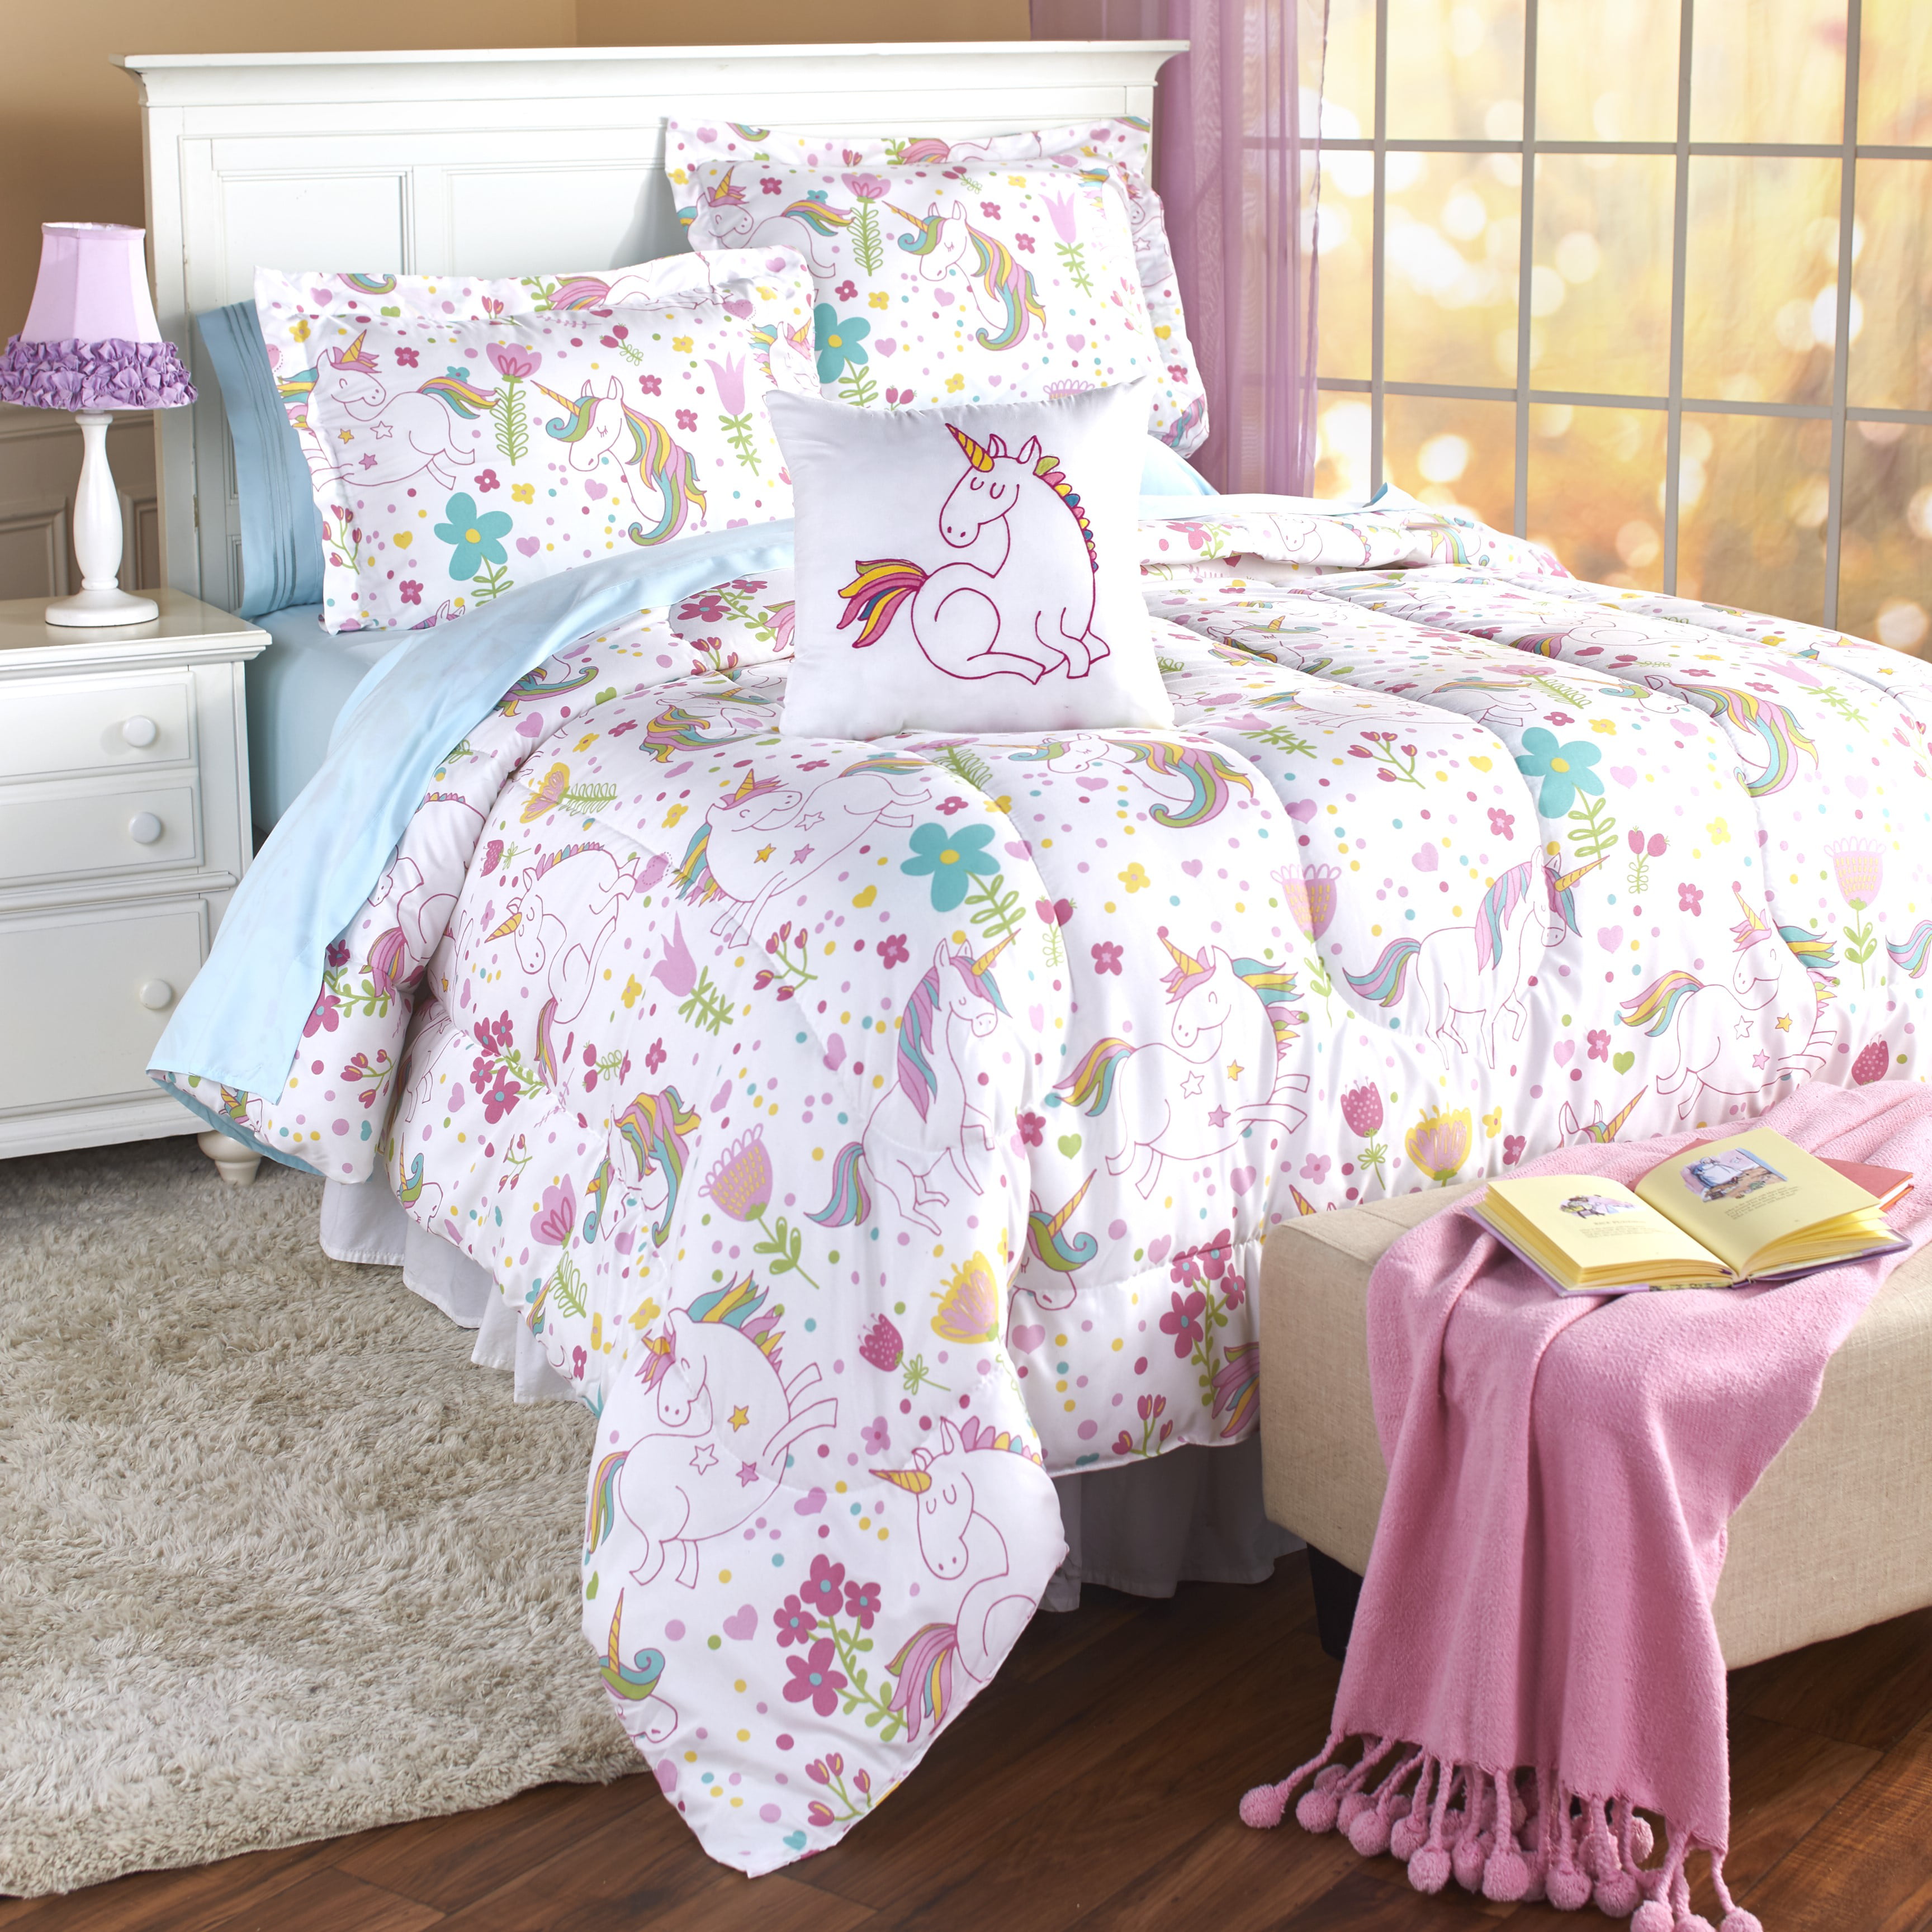 Linen Plus Comforter Set for Girls/Teens Unicorn Rainbow Castle Pink Purple Yellow White New Queen